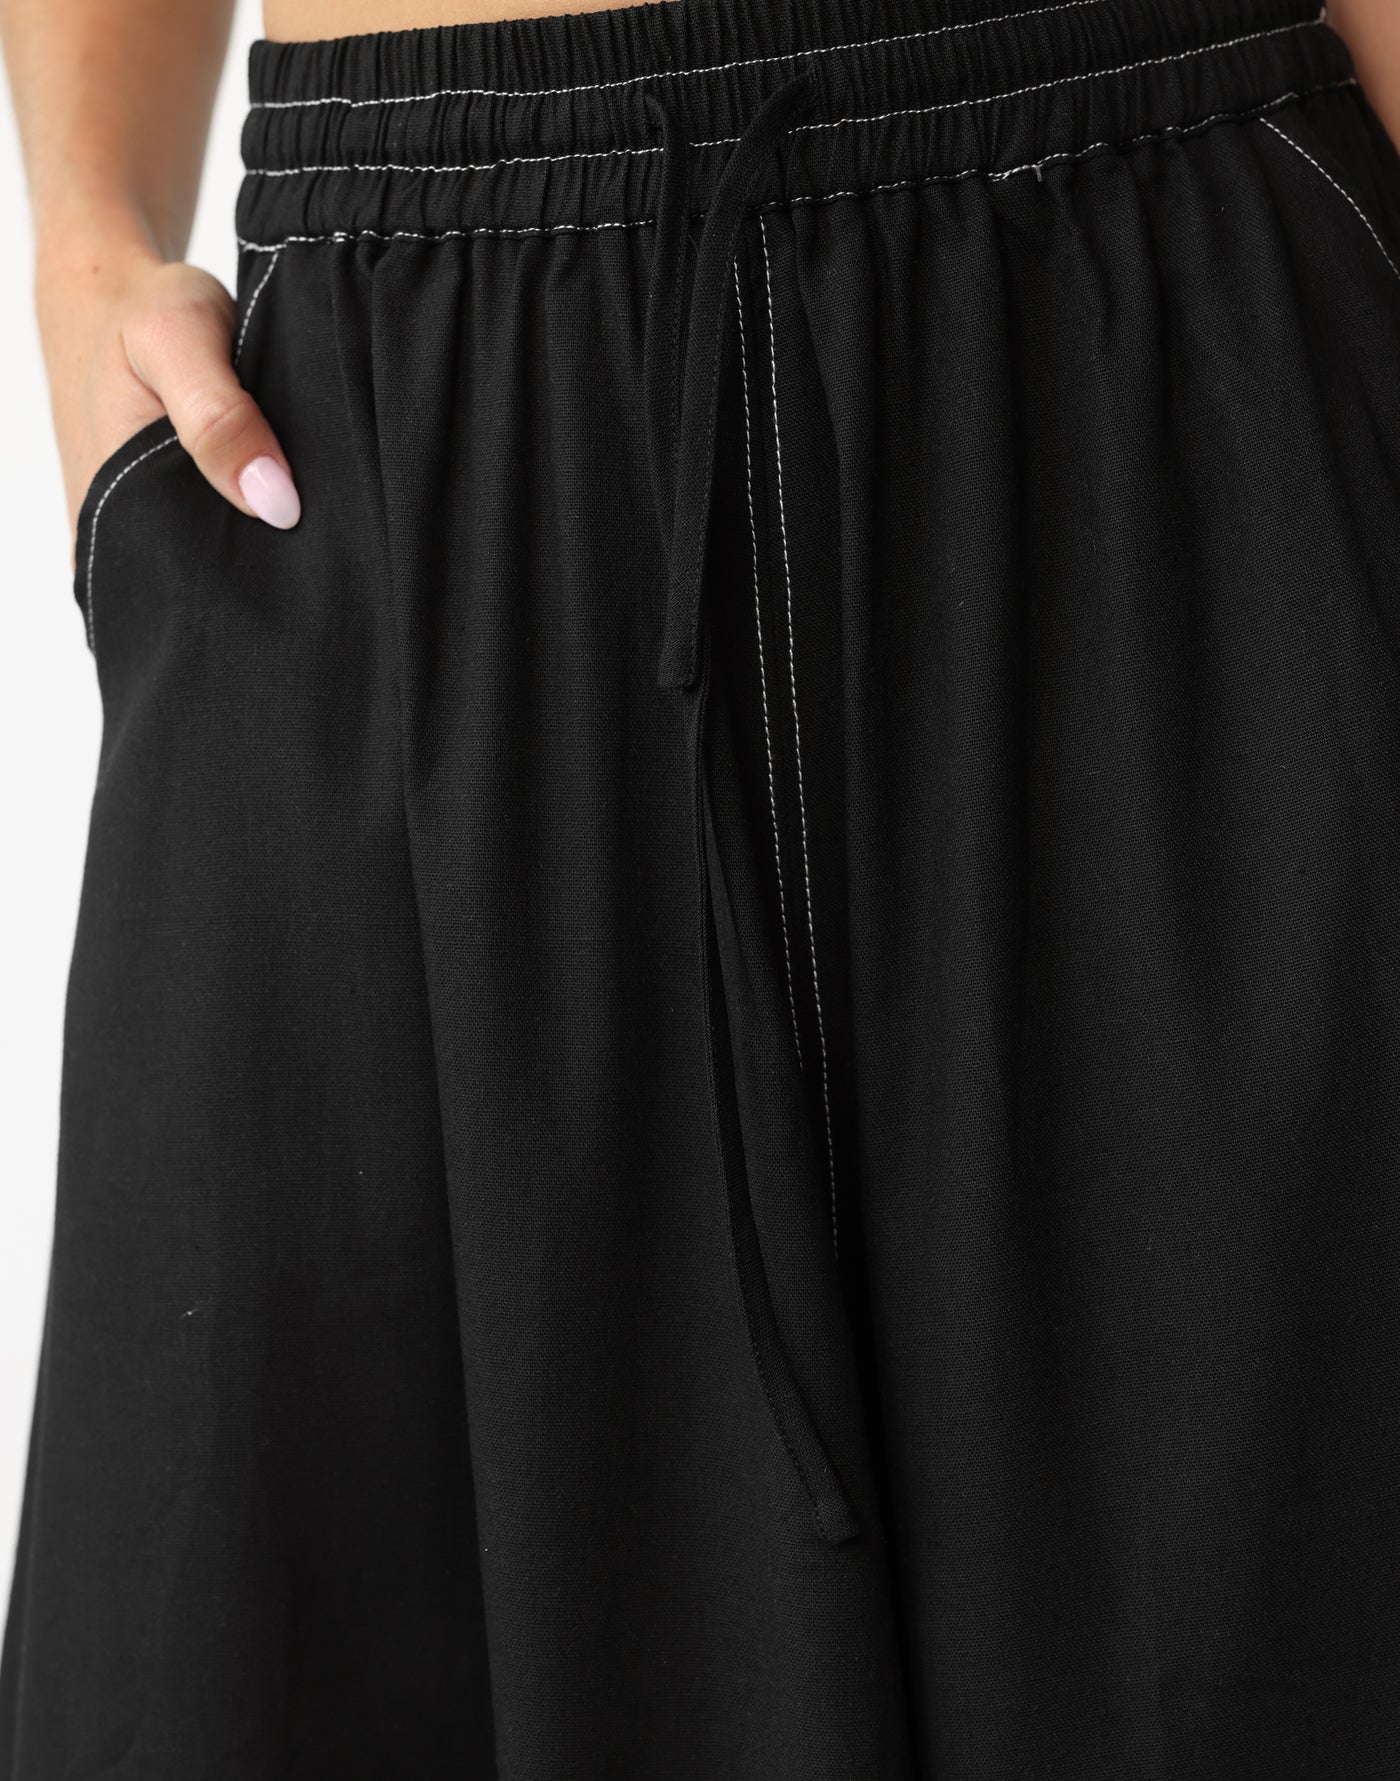 Daylight Maxi Skirt (Black) - - Women's Skirt - Charcoal Clothing